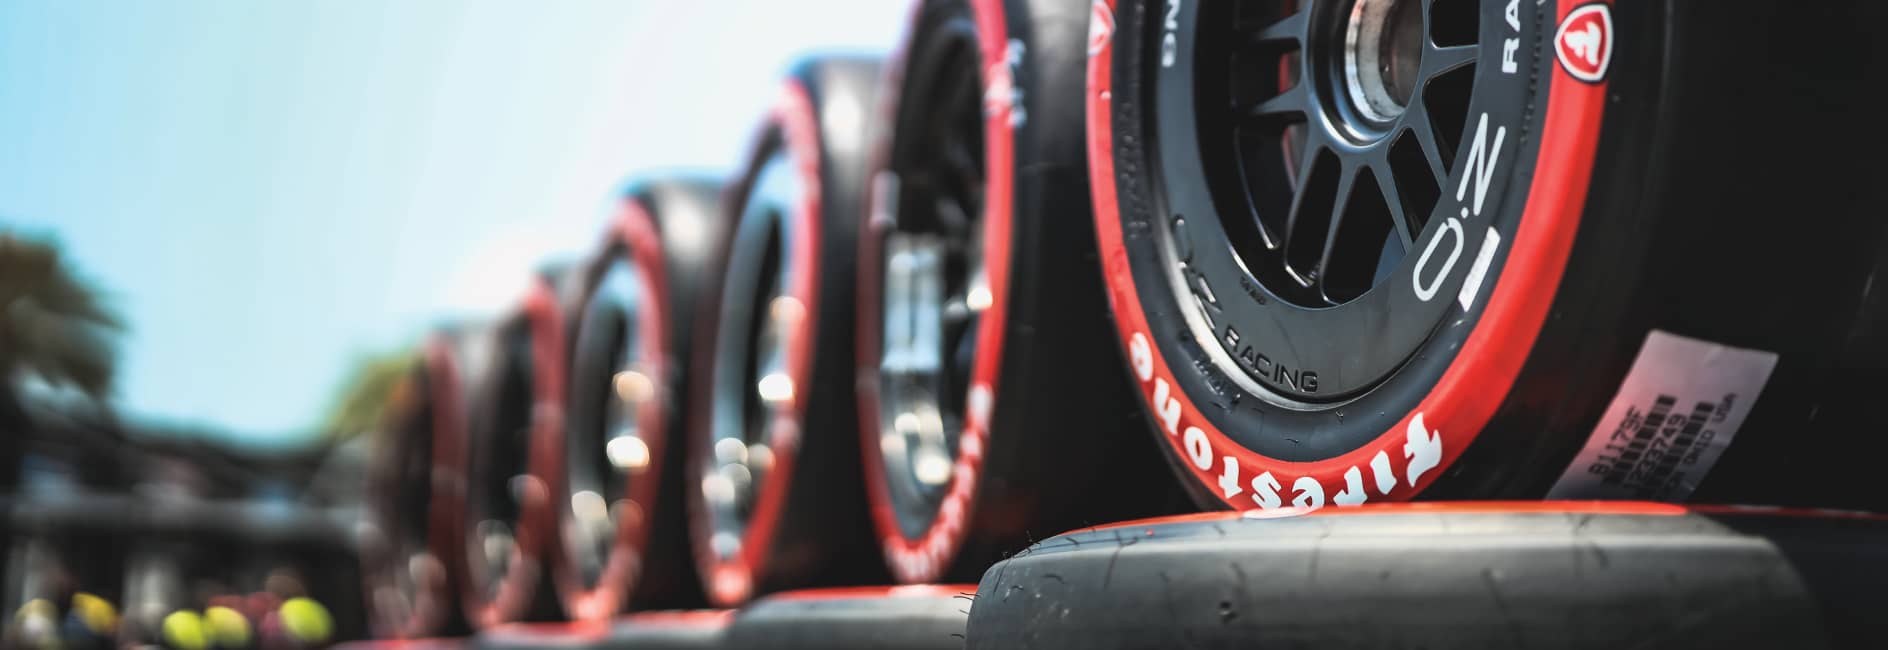 Detroit Racing Tires Red Sidewall